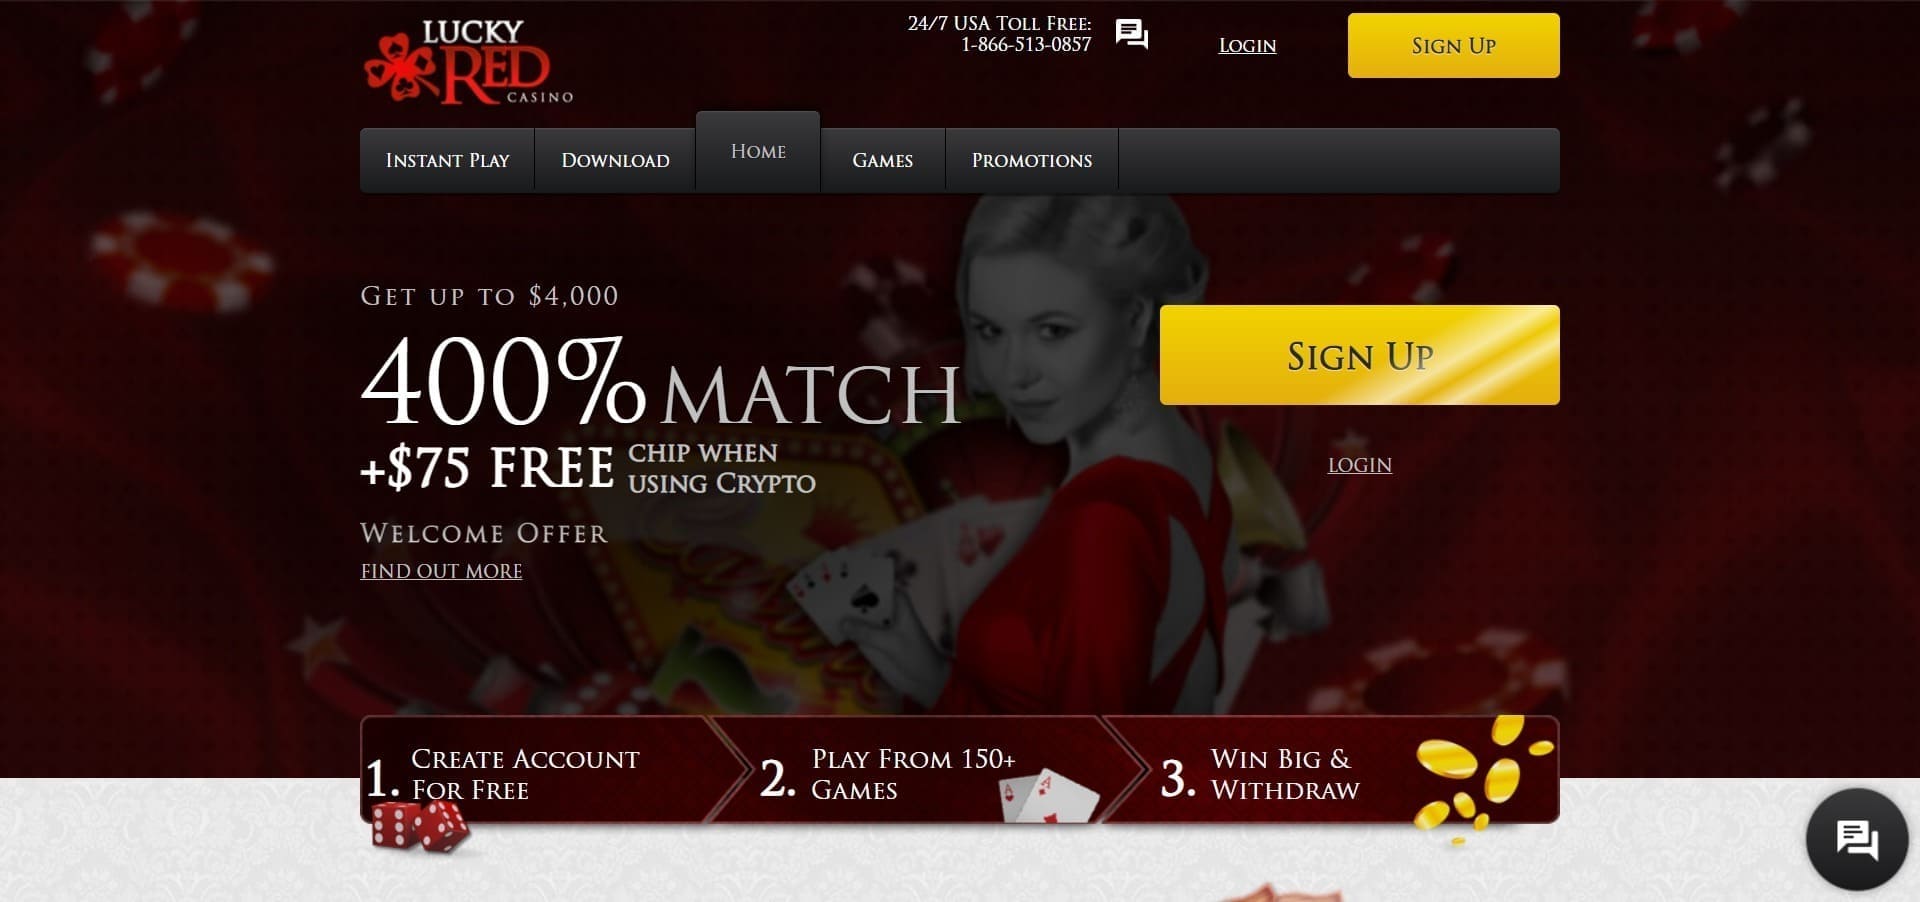 Sitio web oficial de la Lucky Red Casino